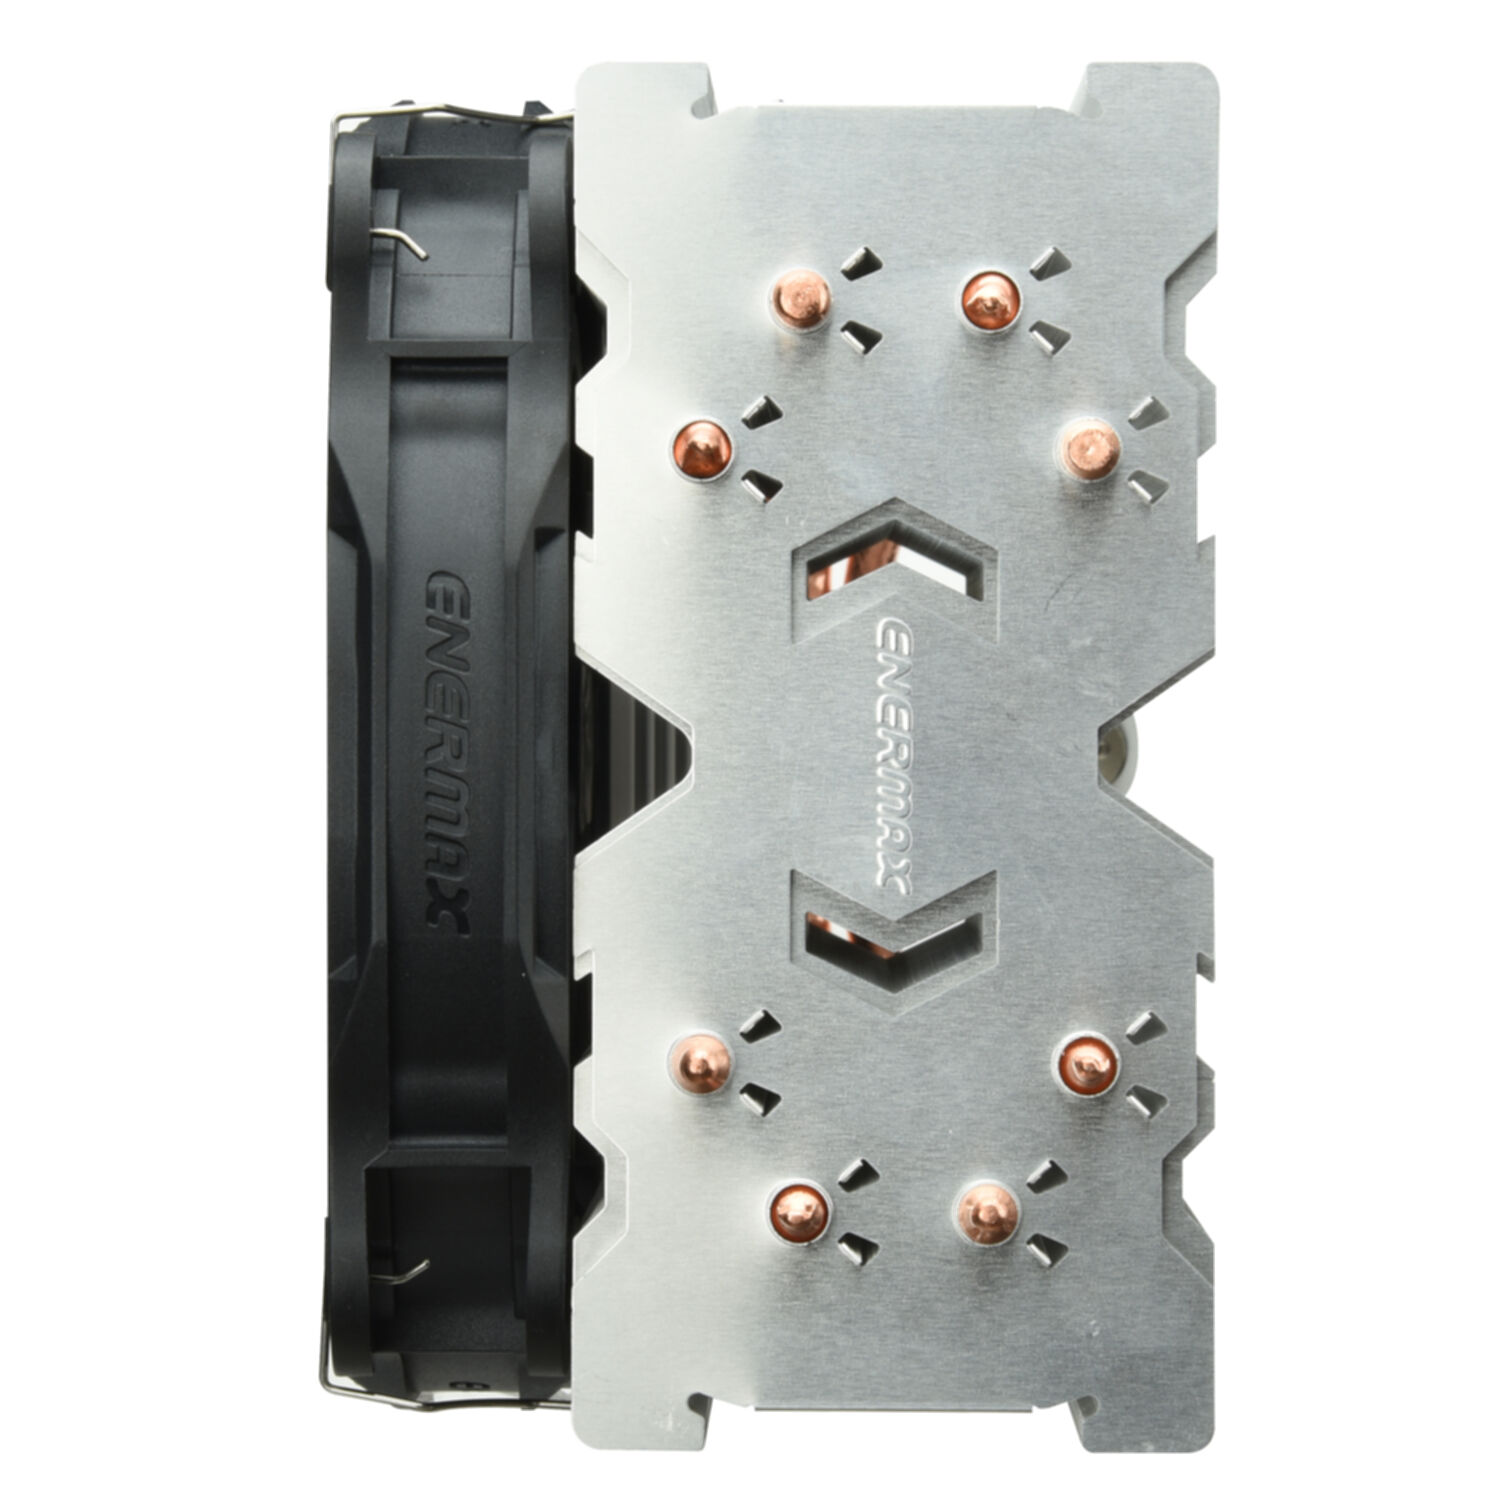 ENERMAX ETS-F40-FS CPU Kühler, Aluminium, Schwarz